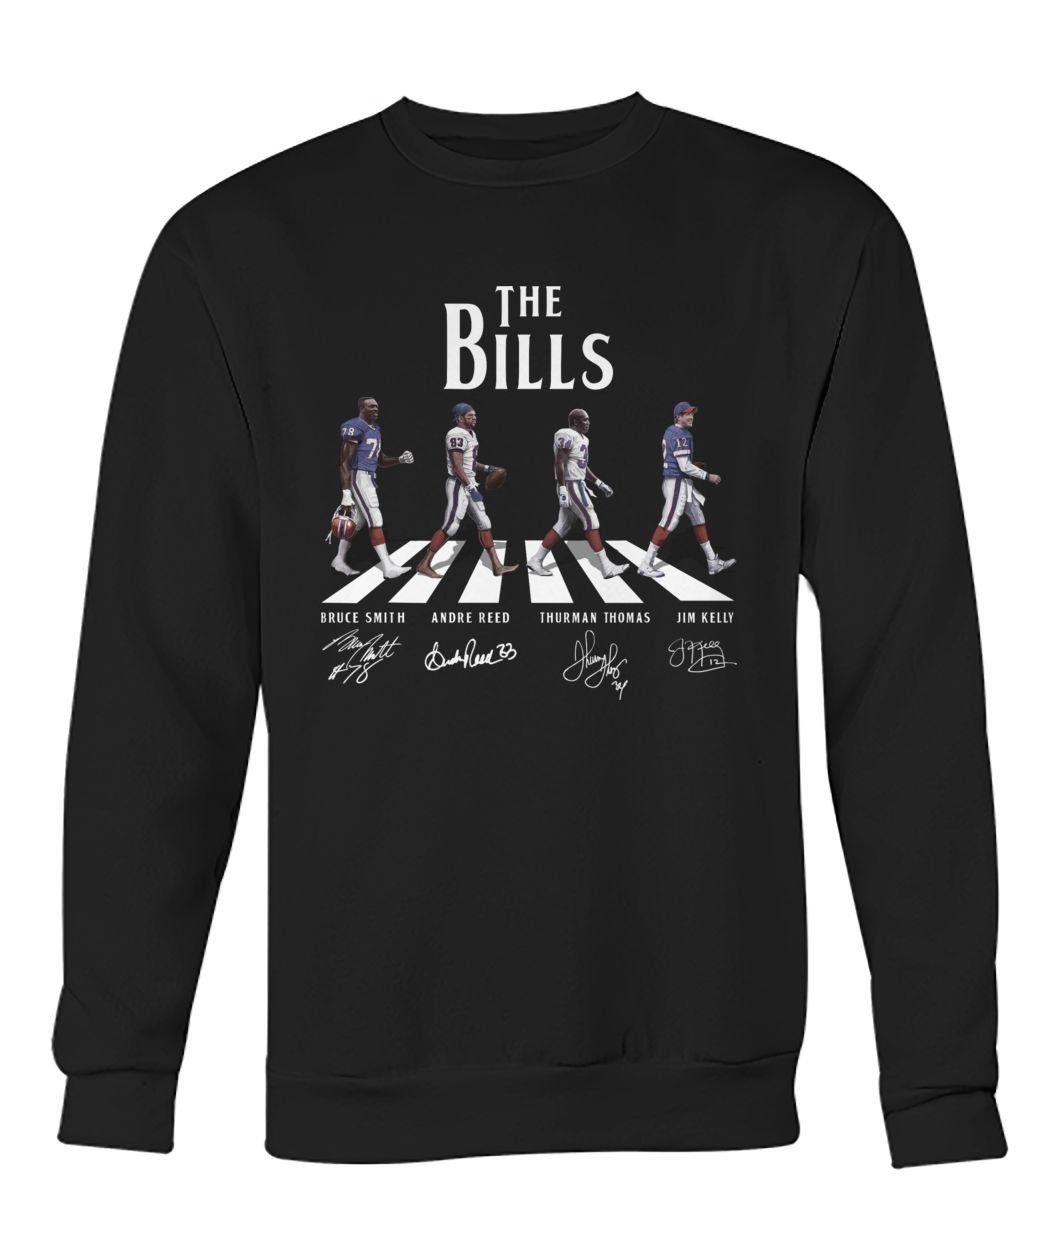 The Bills abbey road sweatshirt